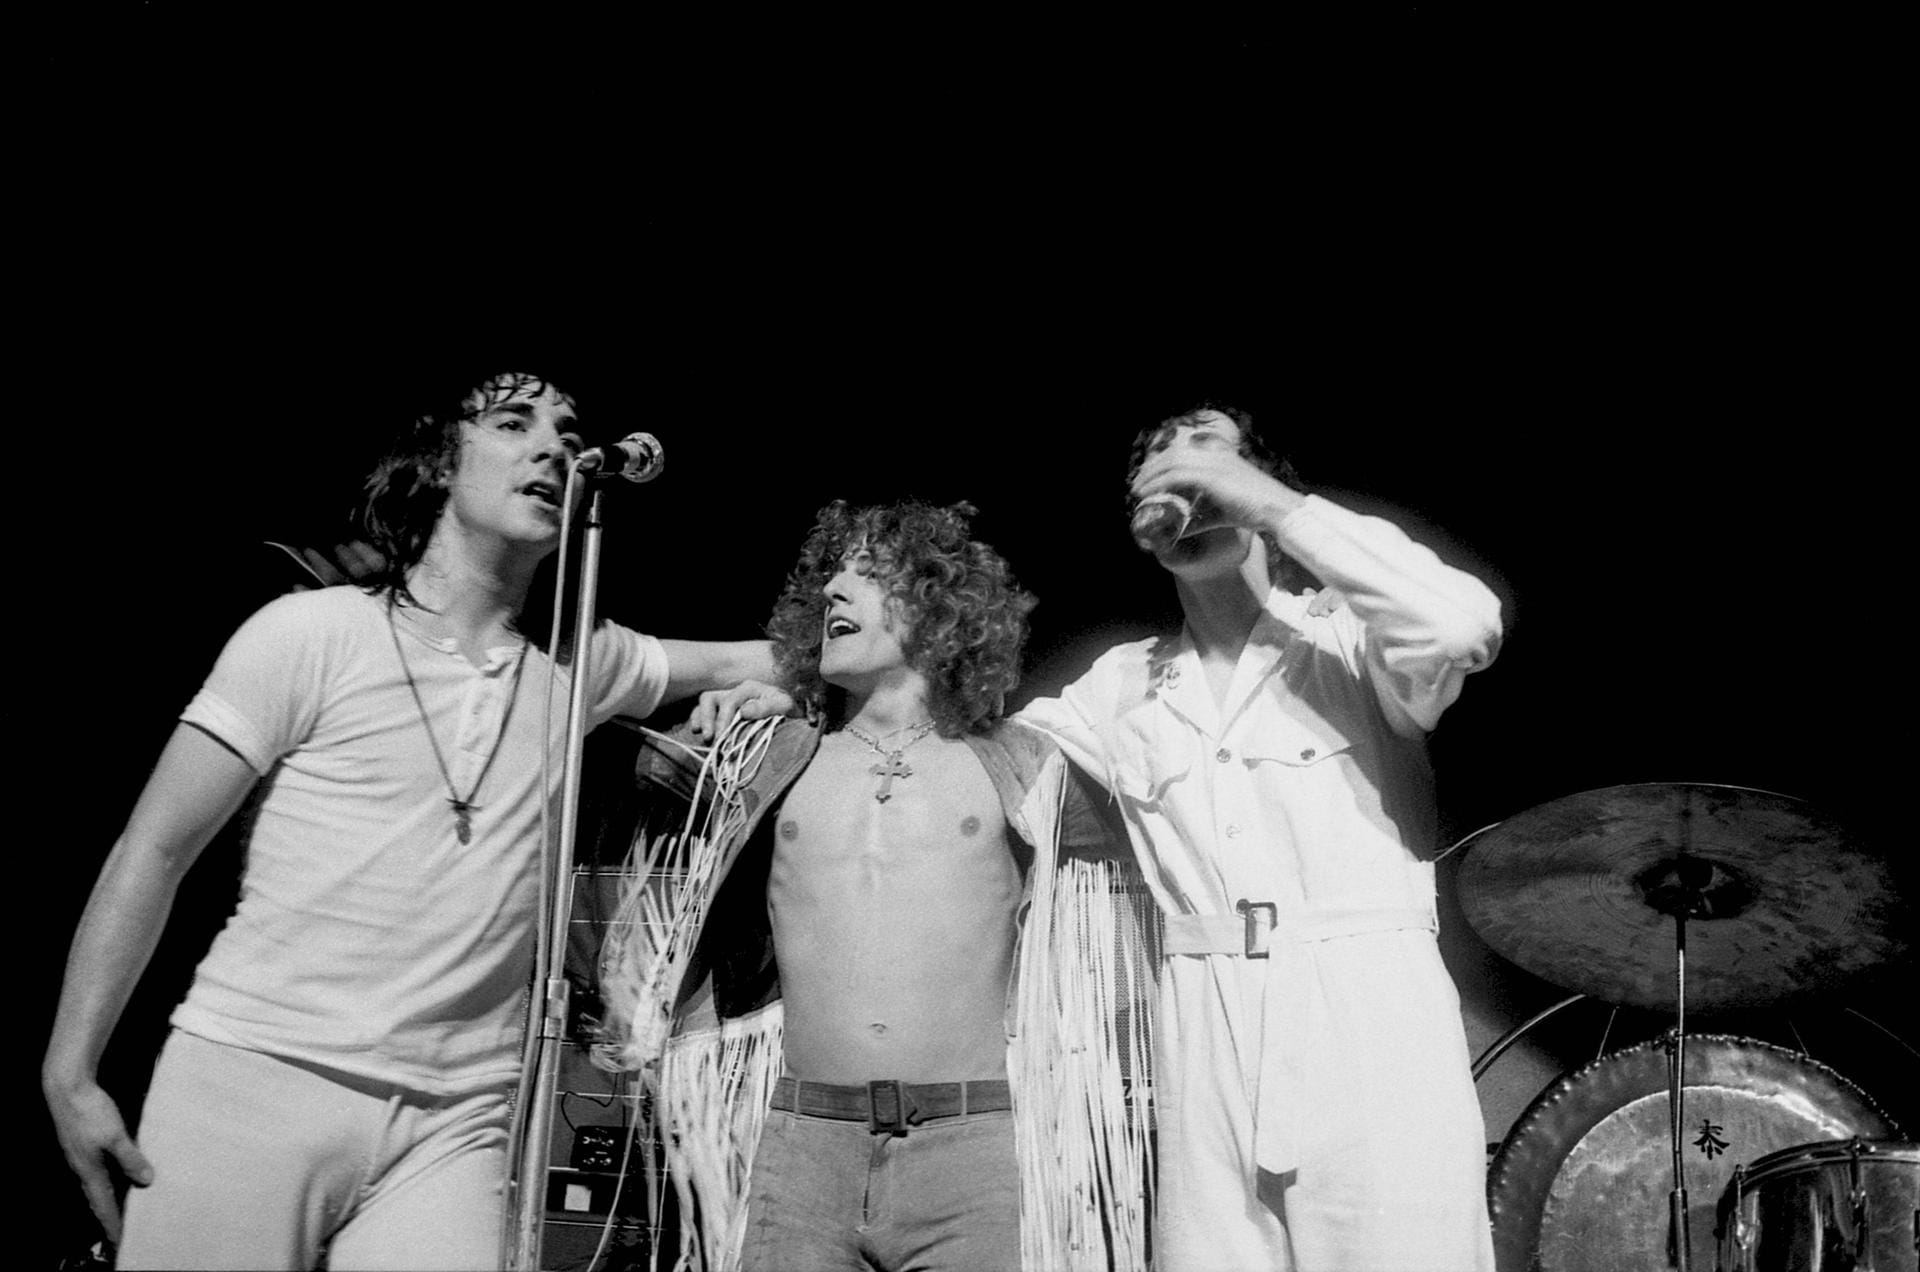 The Who: Die Band um Pete Townshend und Roger Daltrey hat sich in Sachen Rockmusik mehr als verdient gemacht. Bekannteste Songs: "My Generation", "Substitute", "Won't Get Fooled Again", "Pinball Wizard" oder "I Can See For Miles".